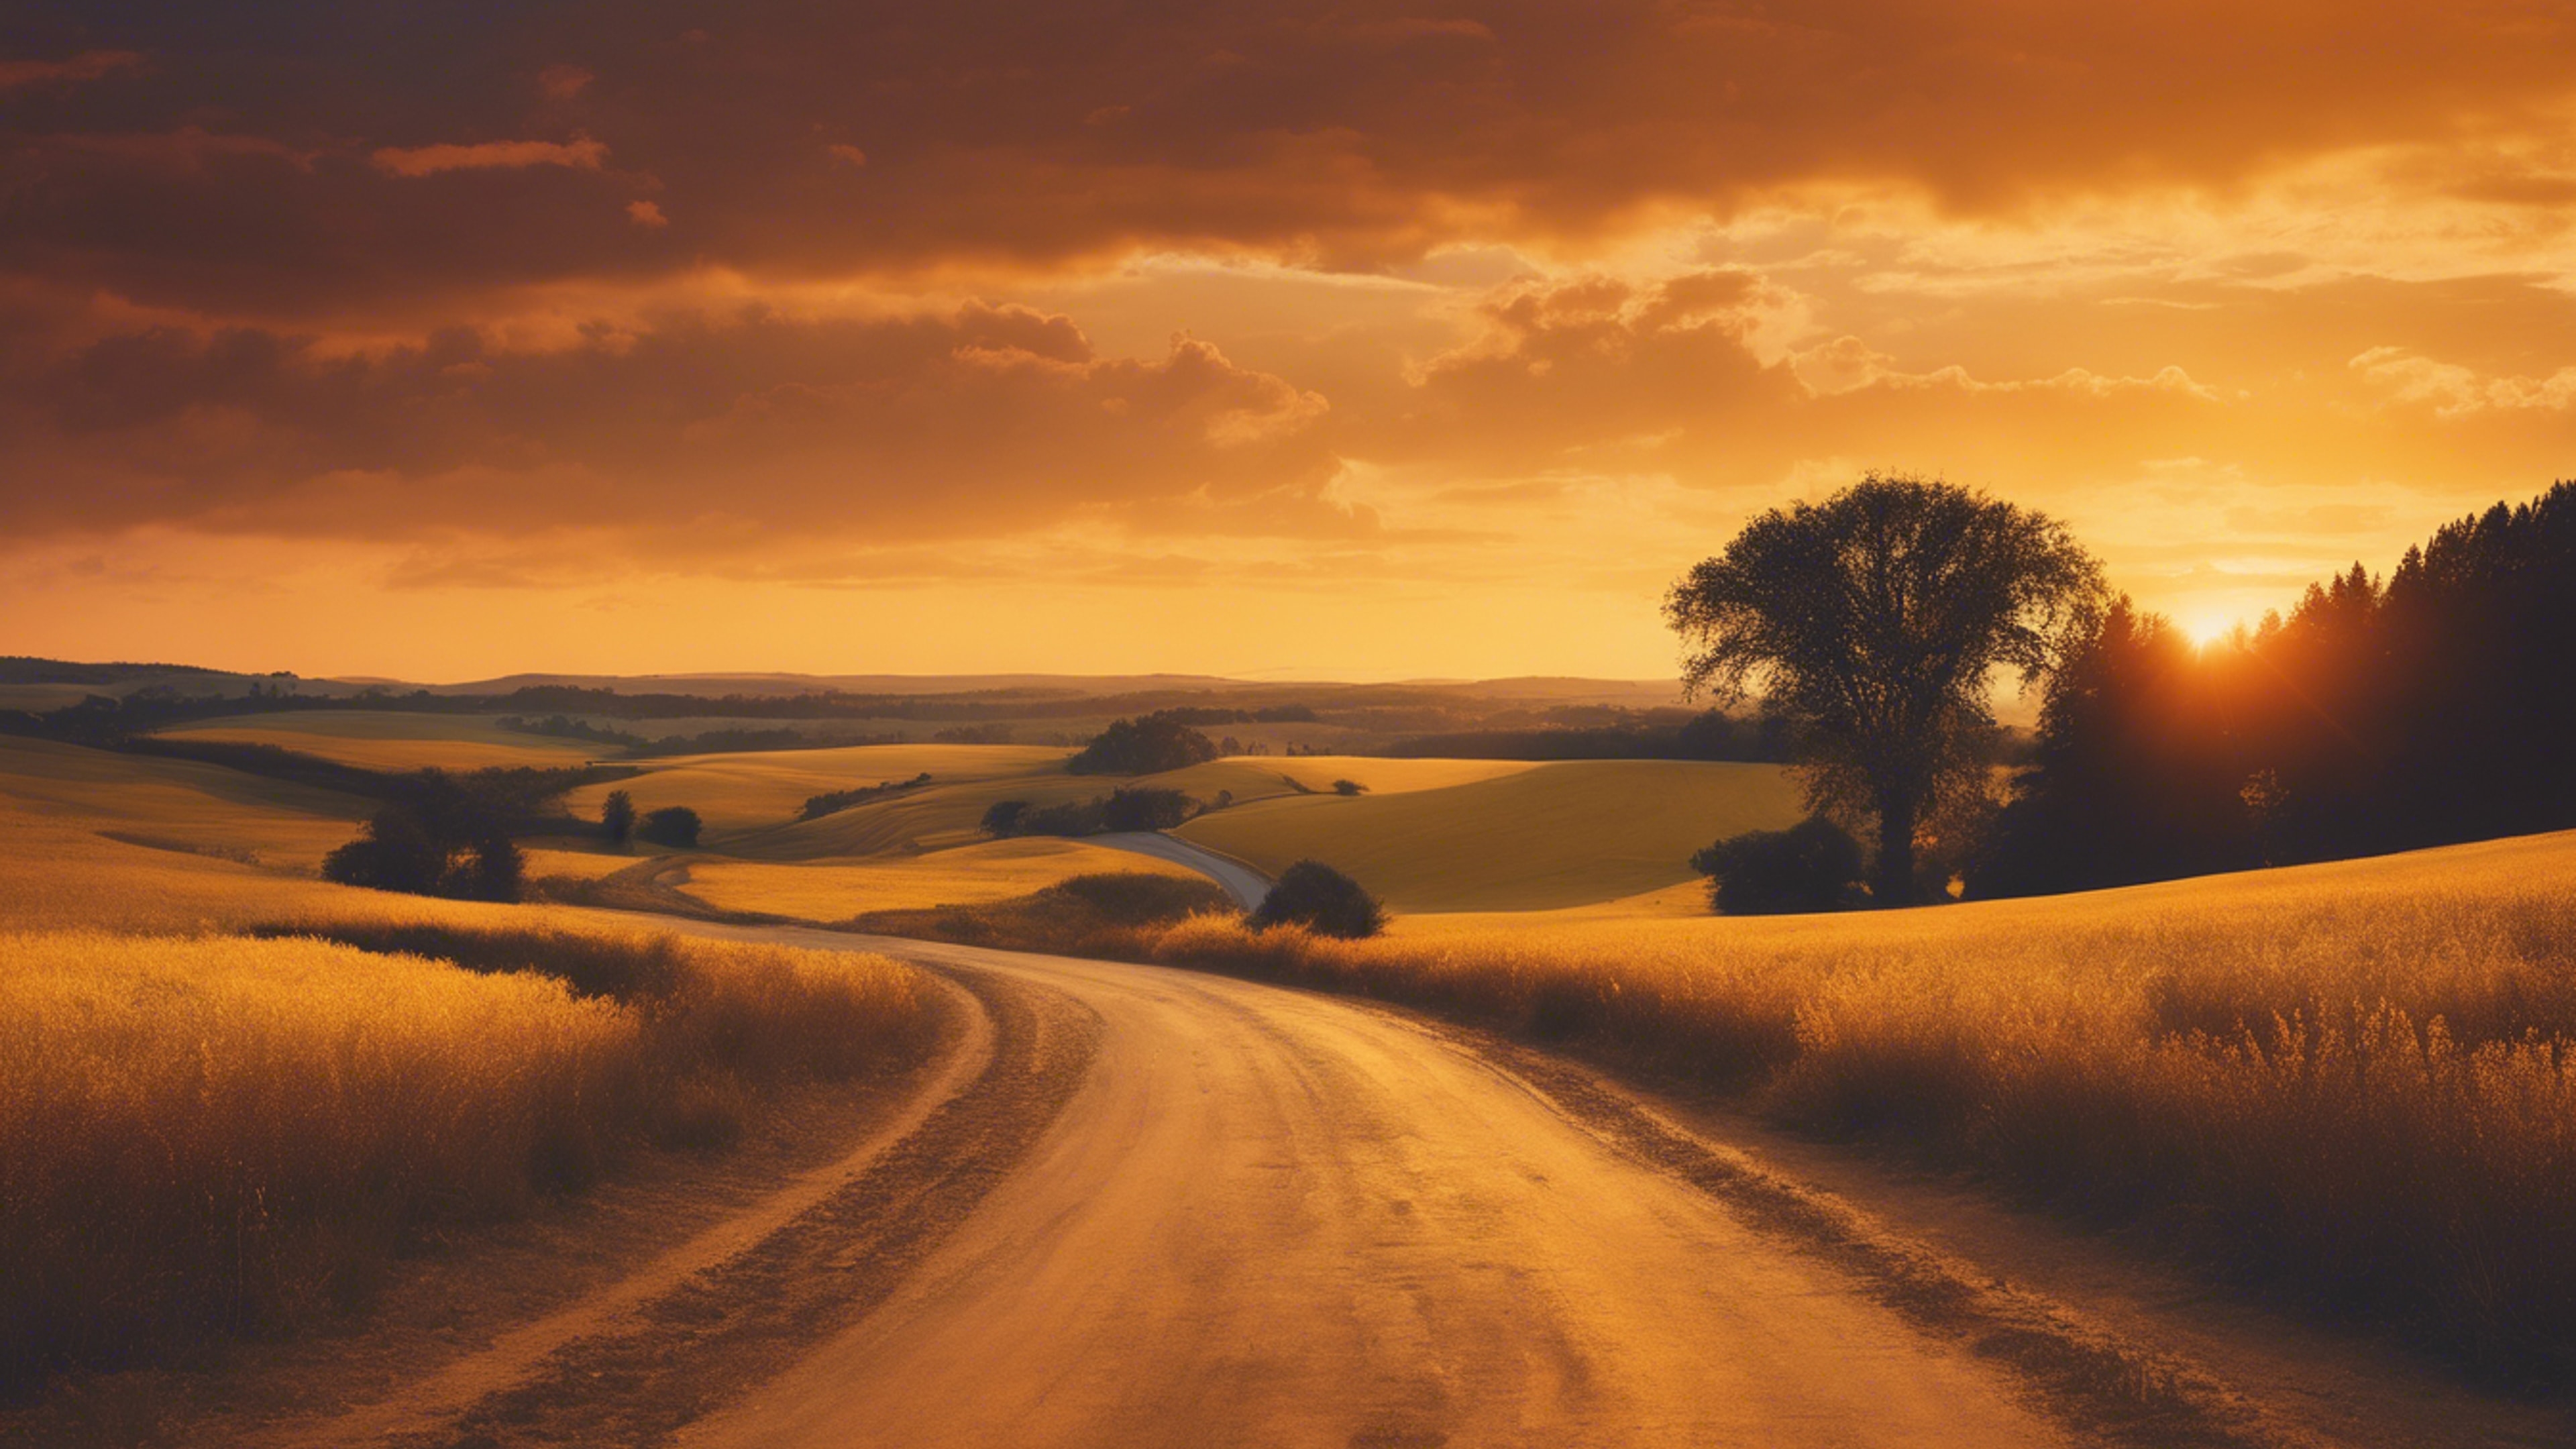 A winding road leading through golden fields under a vibrant, yellow-orange sunset.壁紙[40ed0f0dbc8340e48832]